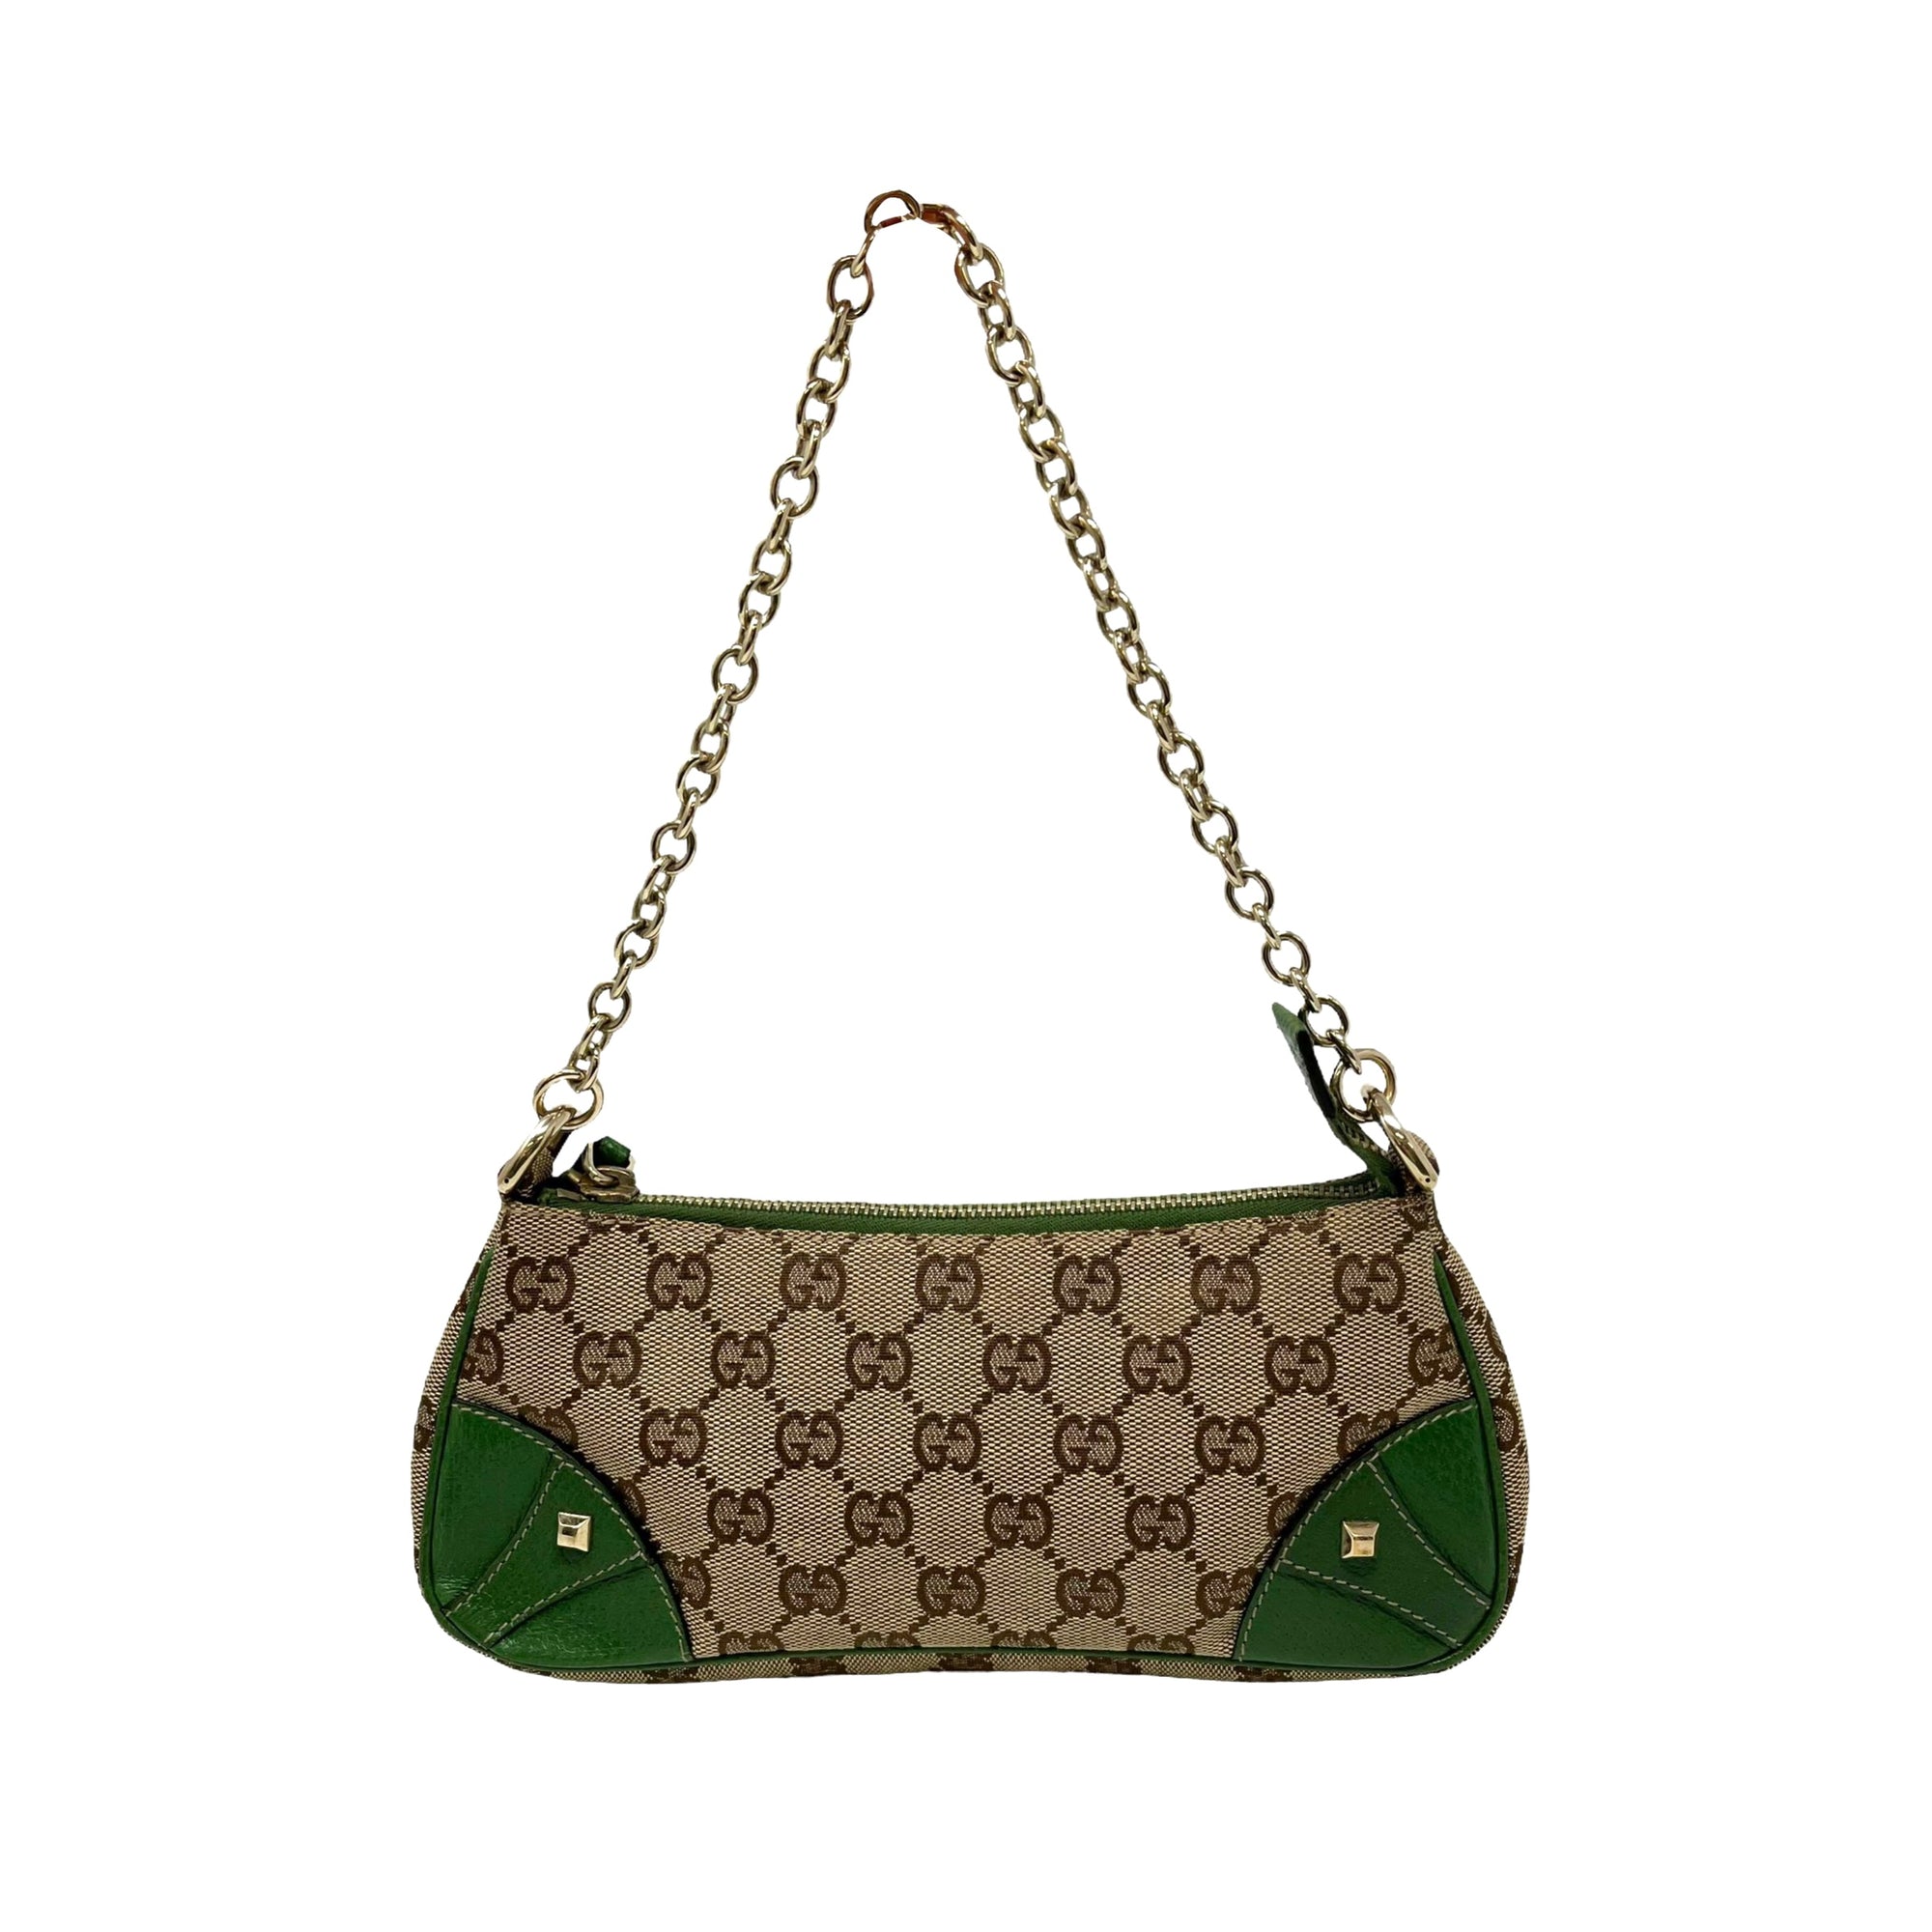 Gucci Green Mini Chain Shoulder Bag